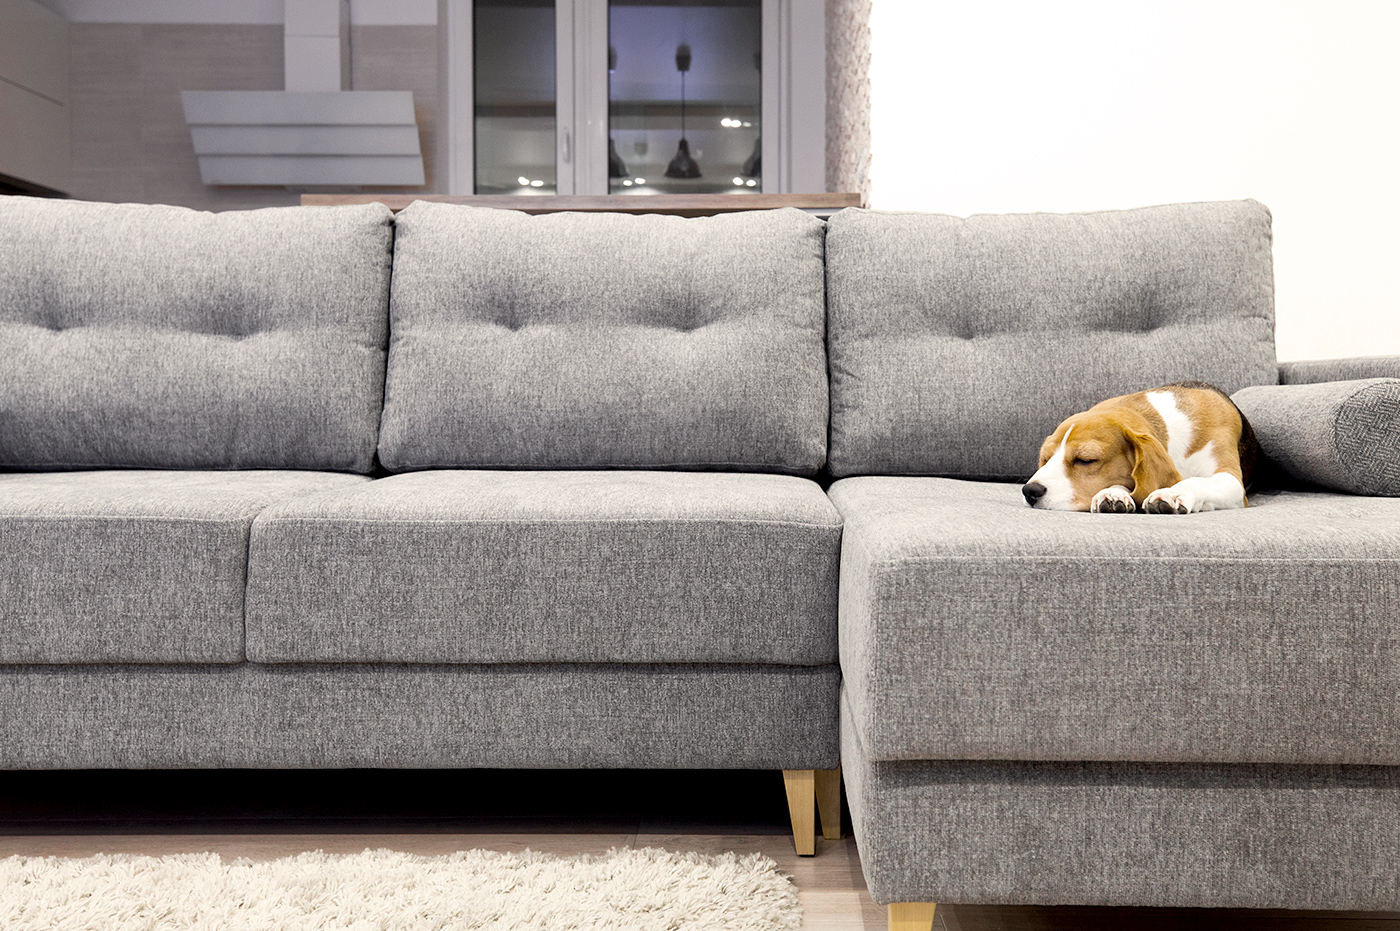 A grey sofa with a beagle puppy sleeping on it.